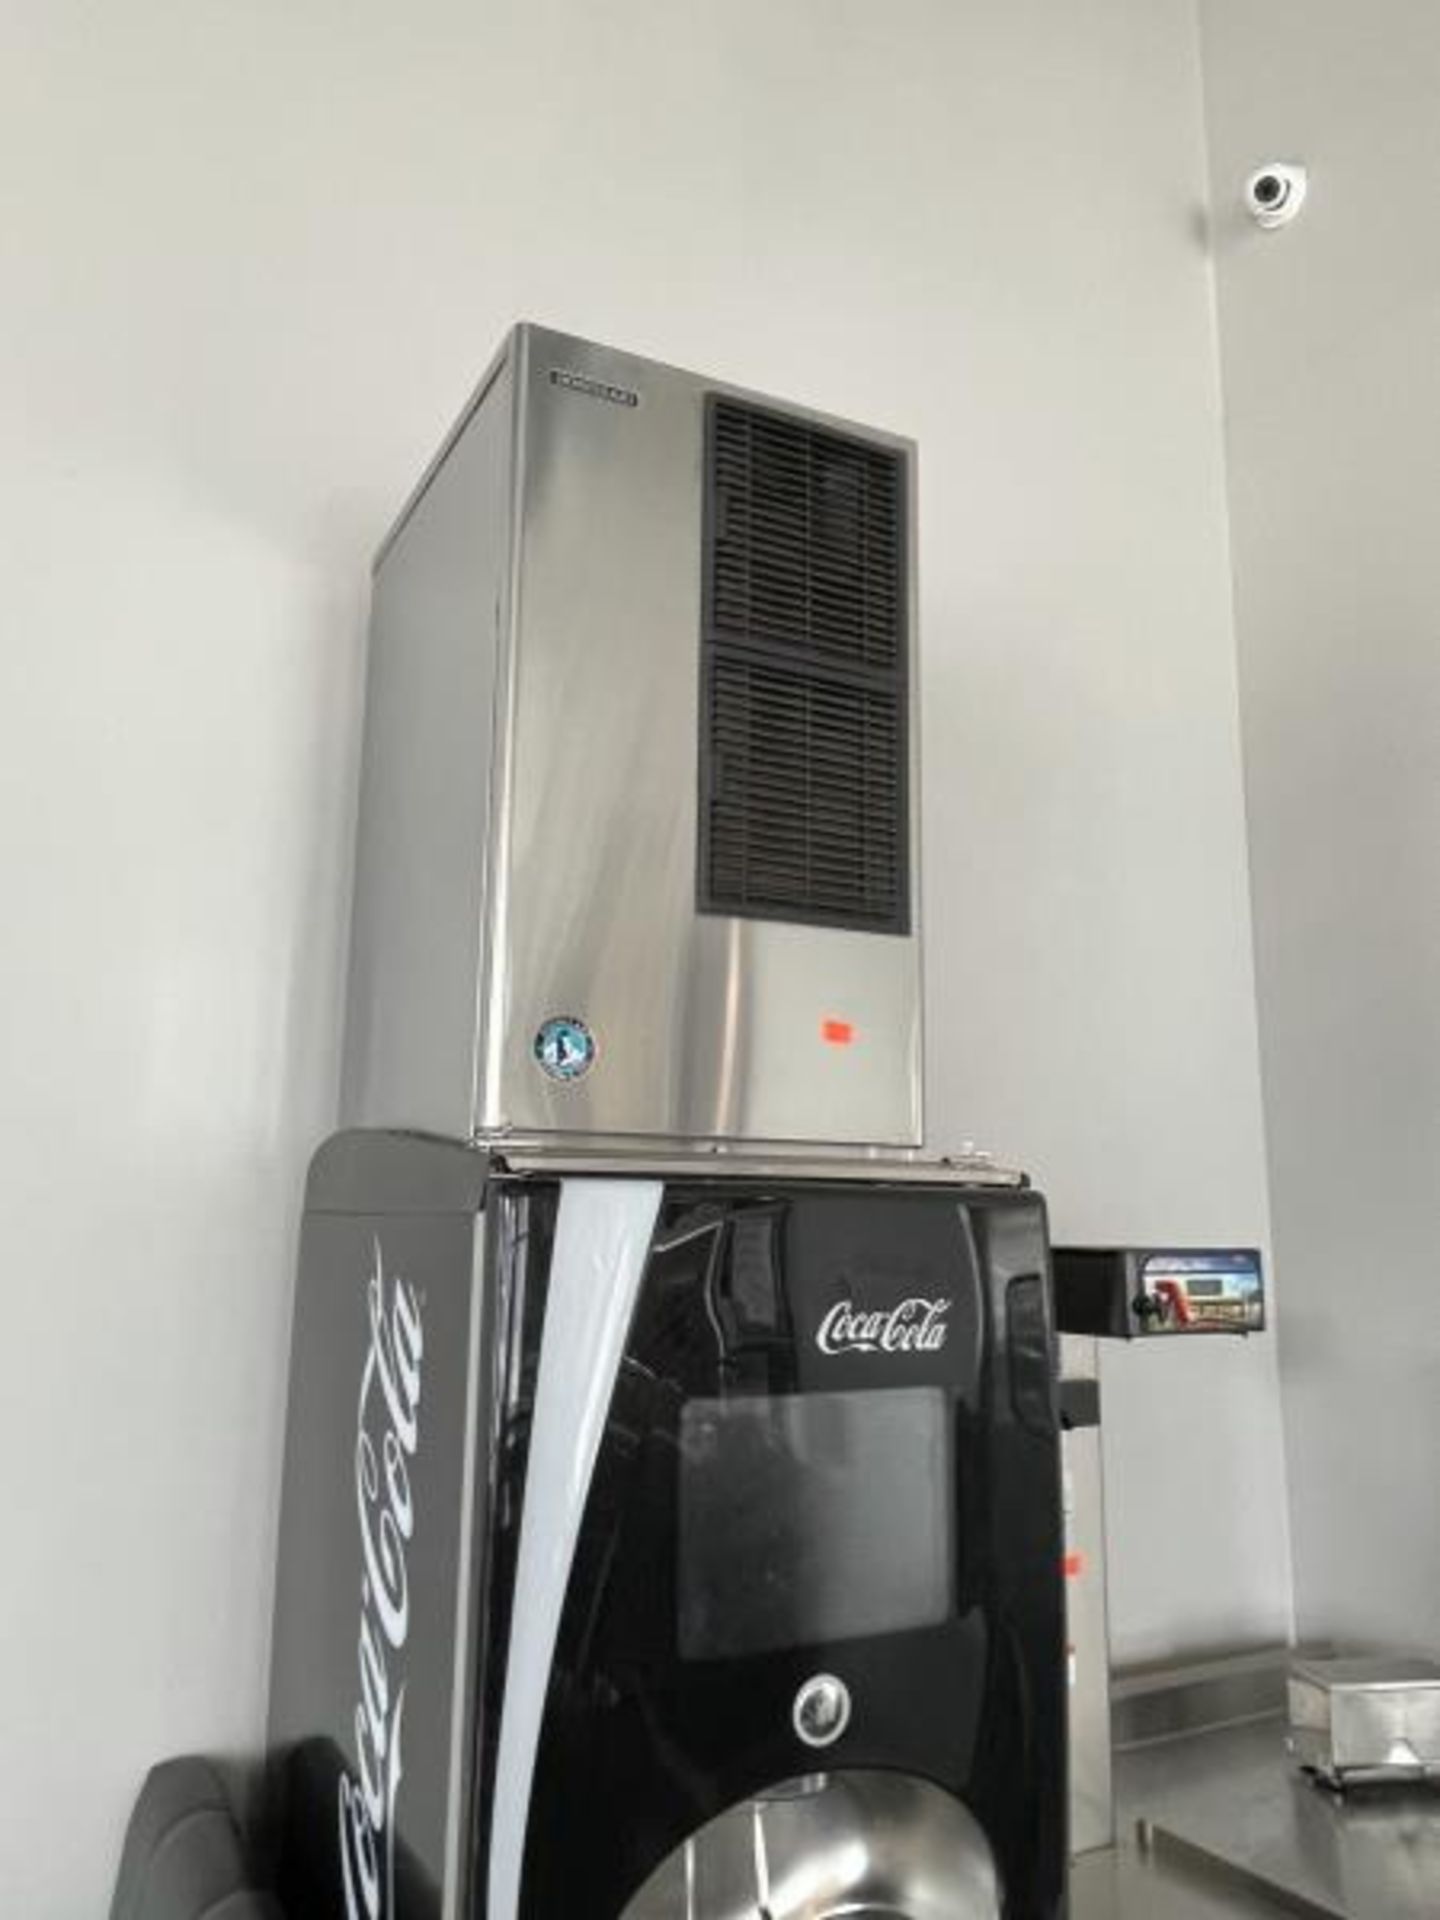 Hoshizaki ice machine, no storage, M: KM-600MAH, must be removed from the Coke machine base - Image 5 of 5